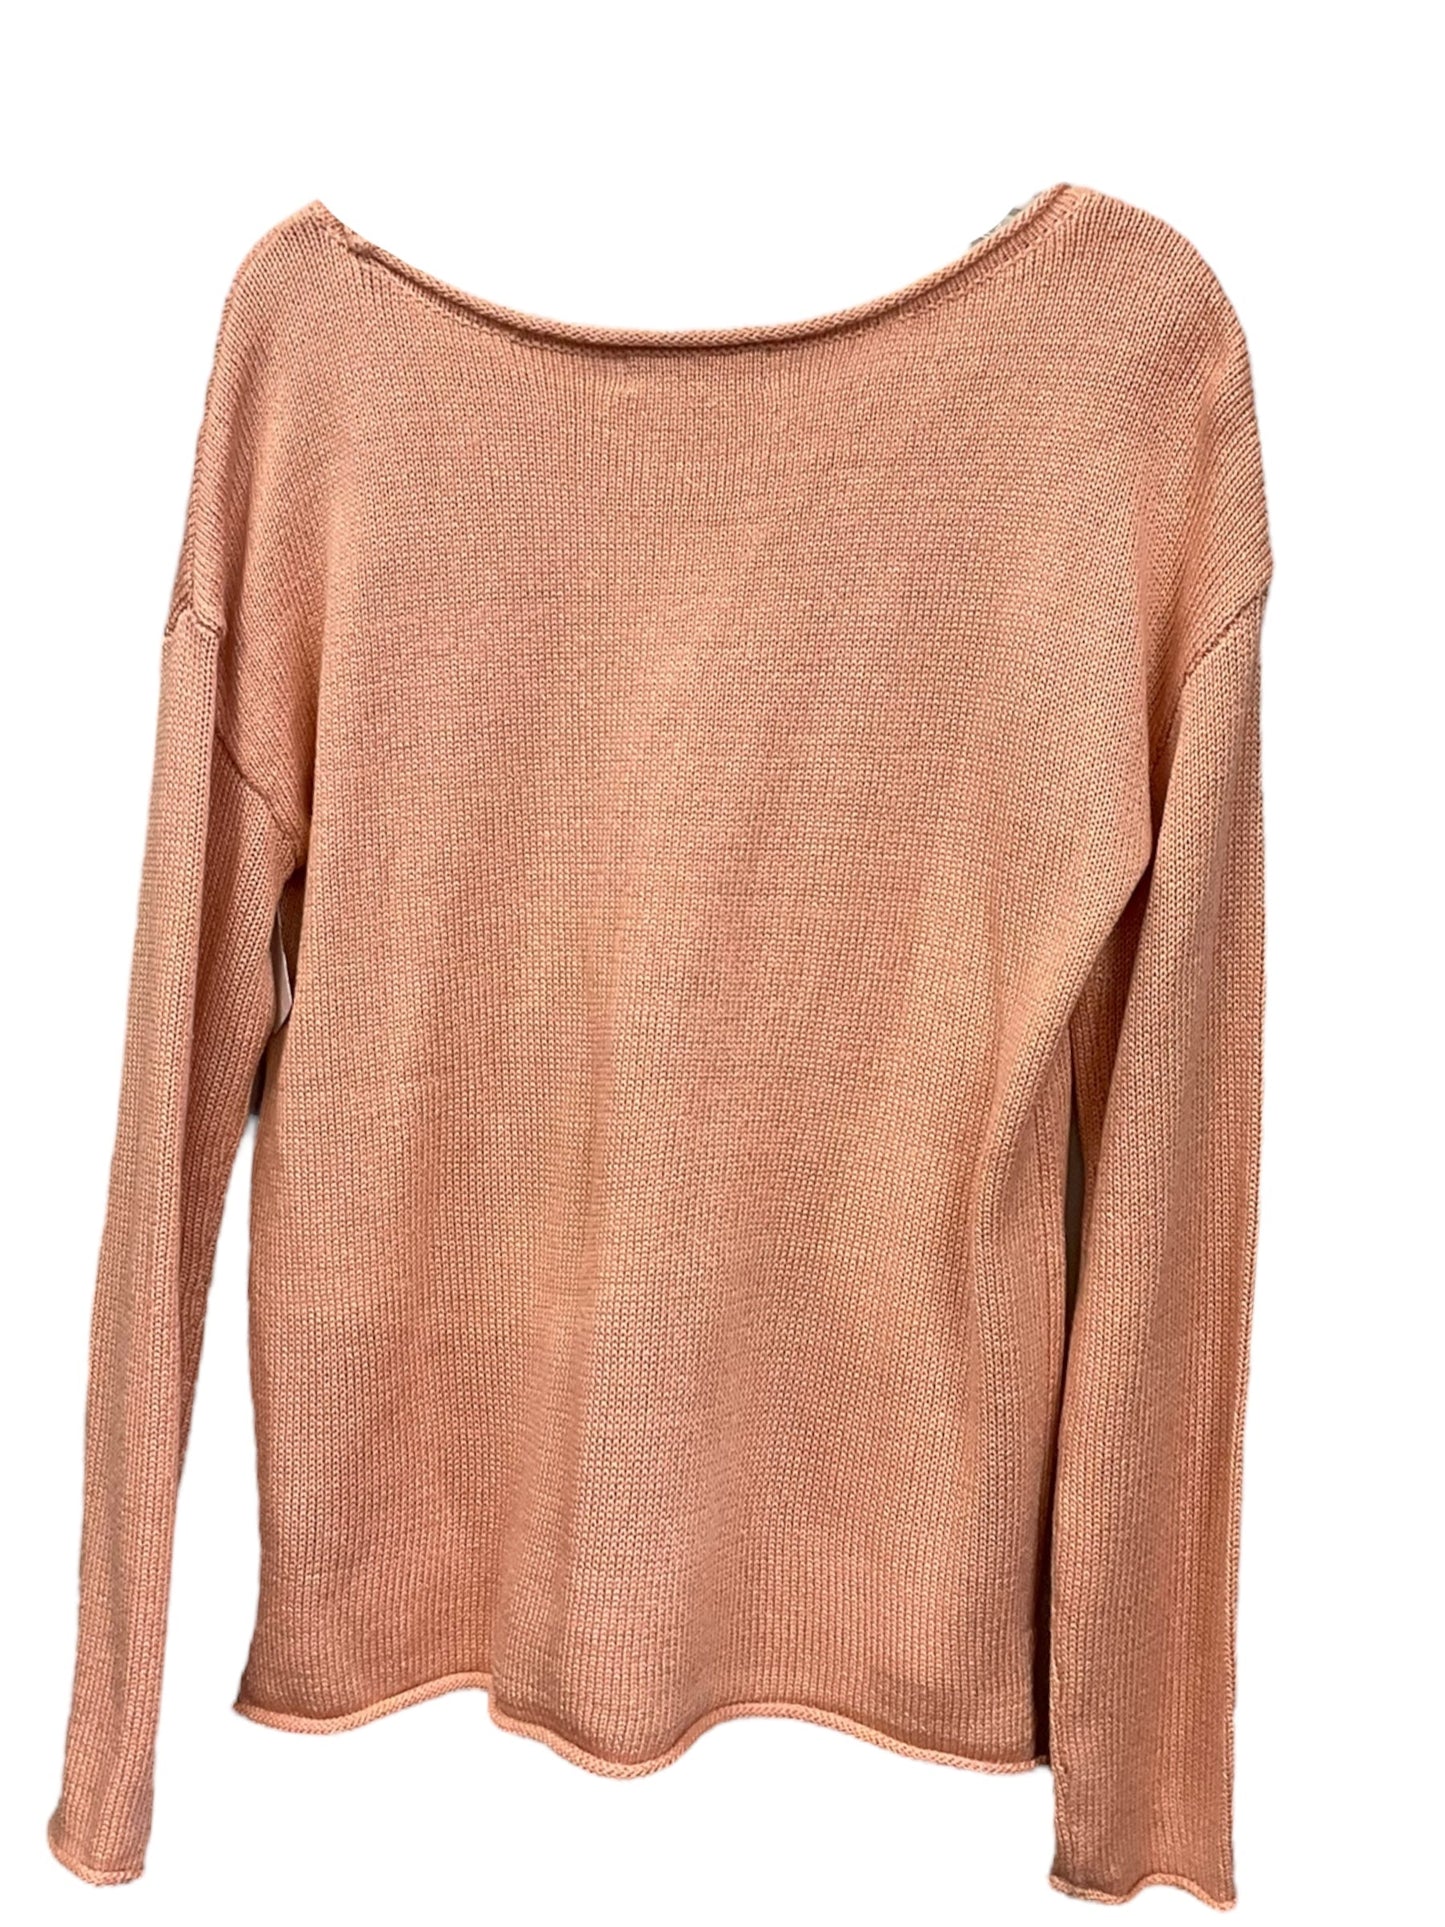 Peach Sweater Marled, Size M